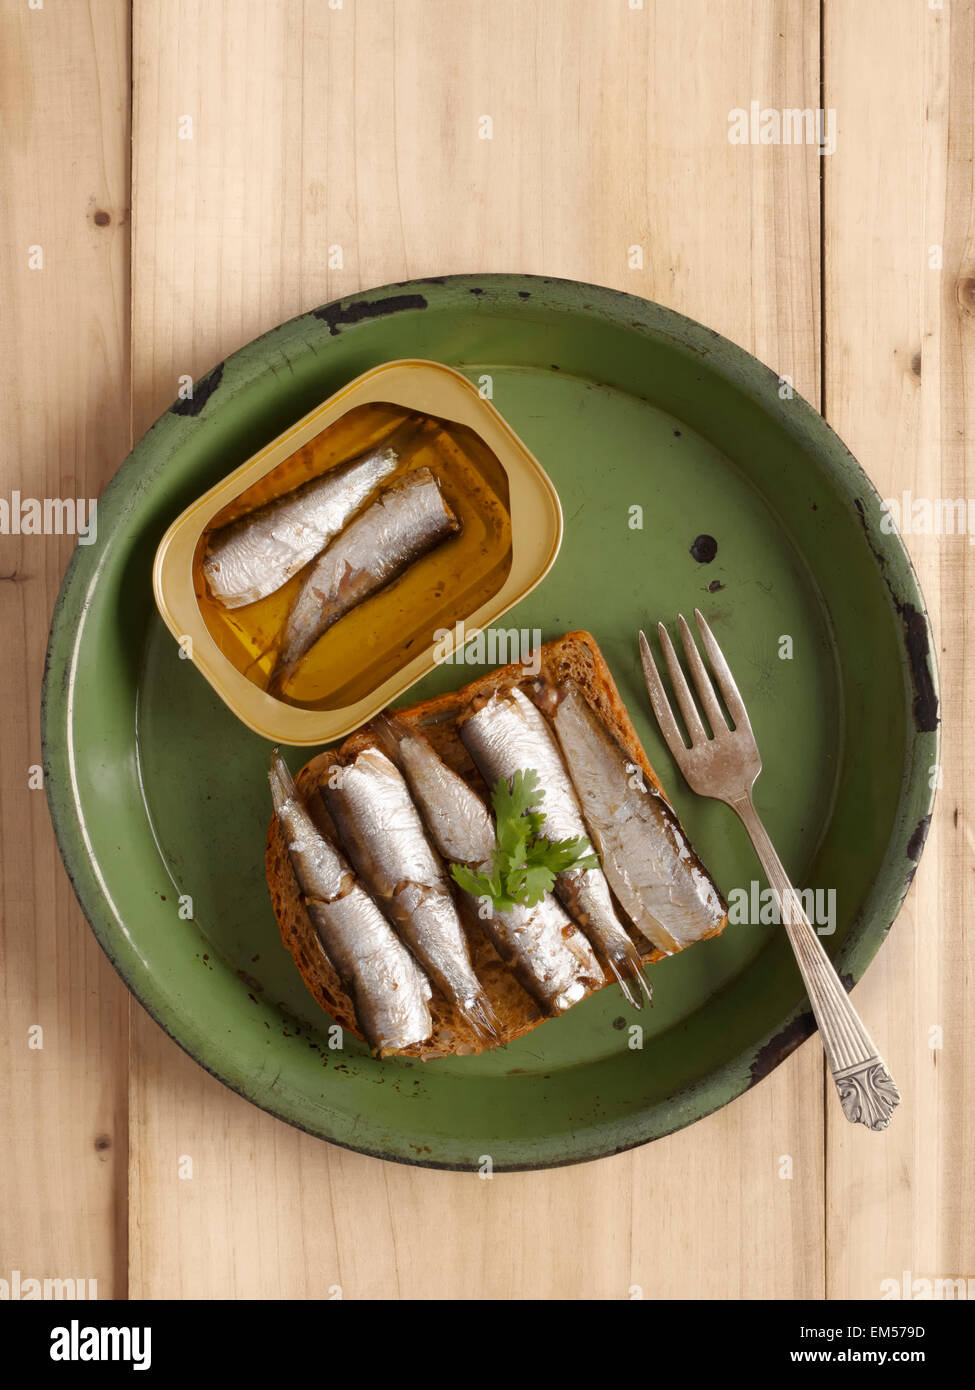 sardine sandwich Stock Photo